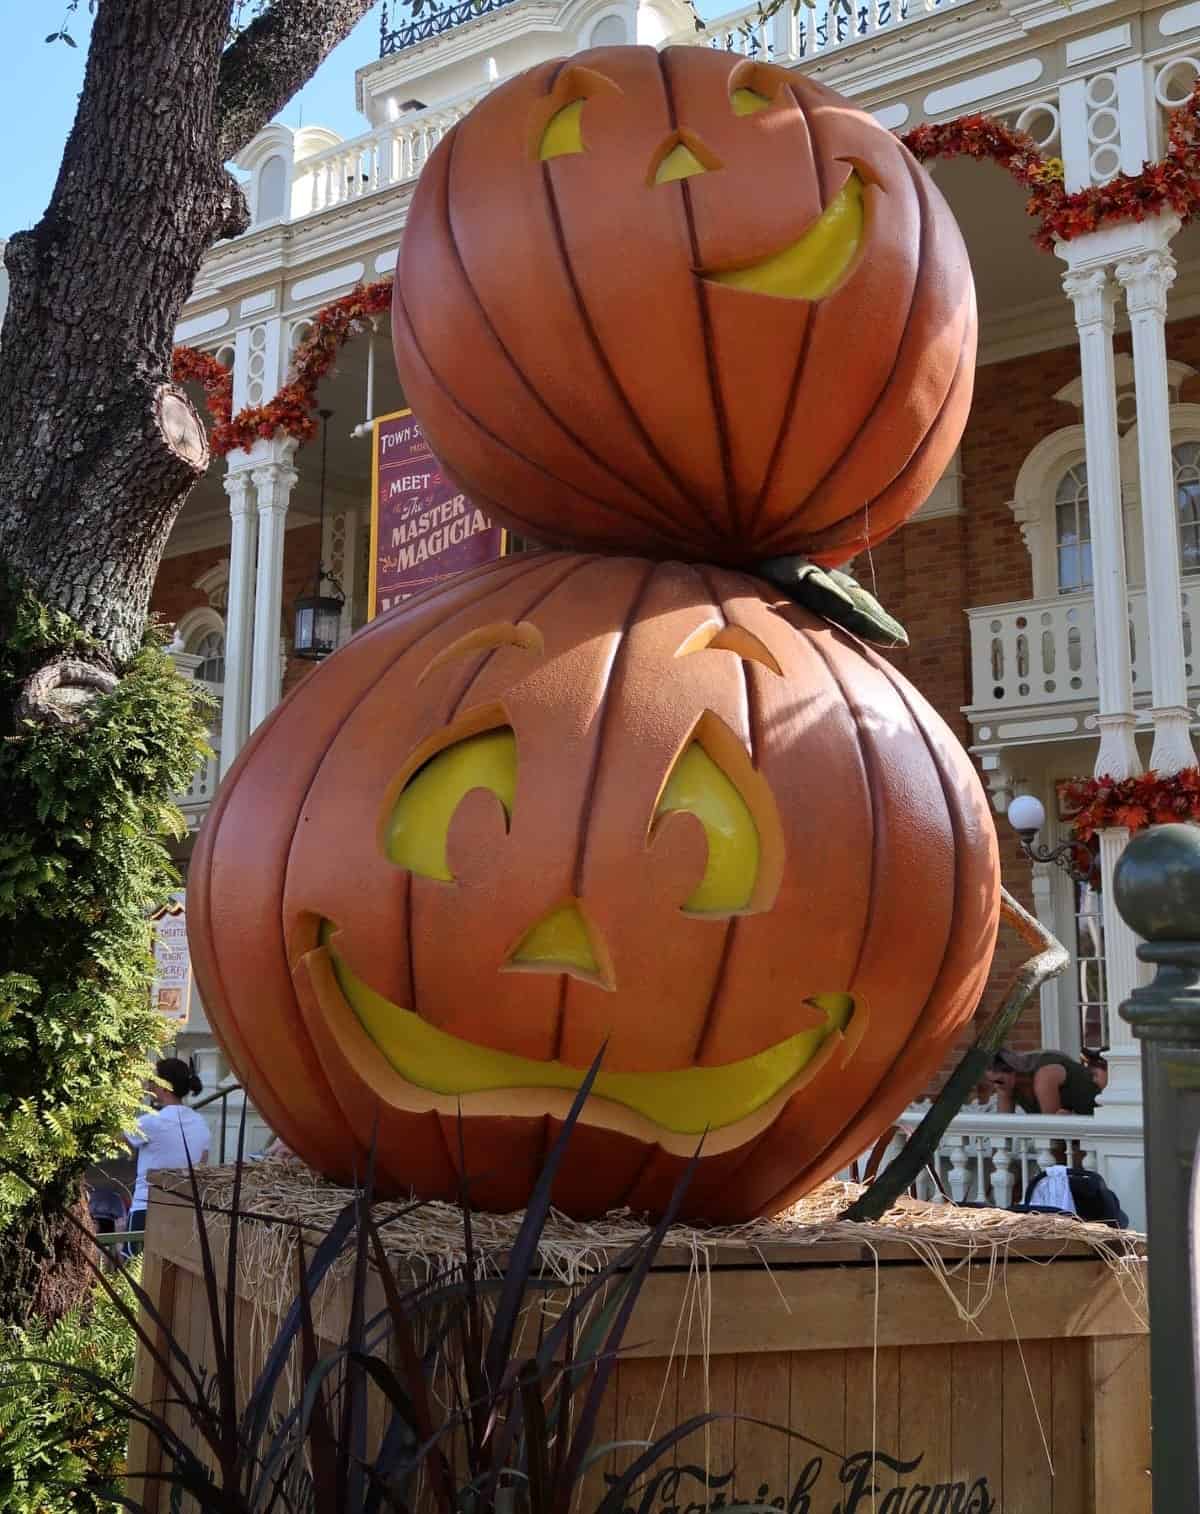 Fall décor greets guests entering Walt Disney World.